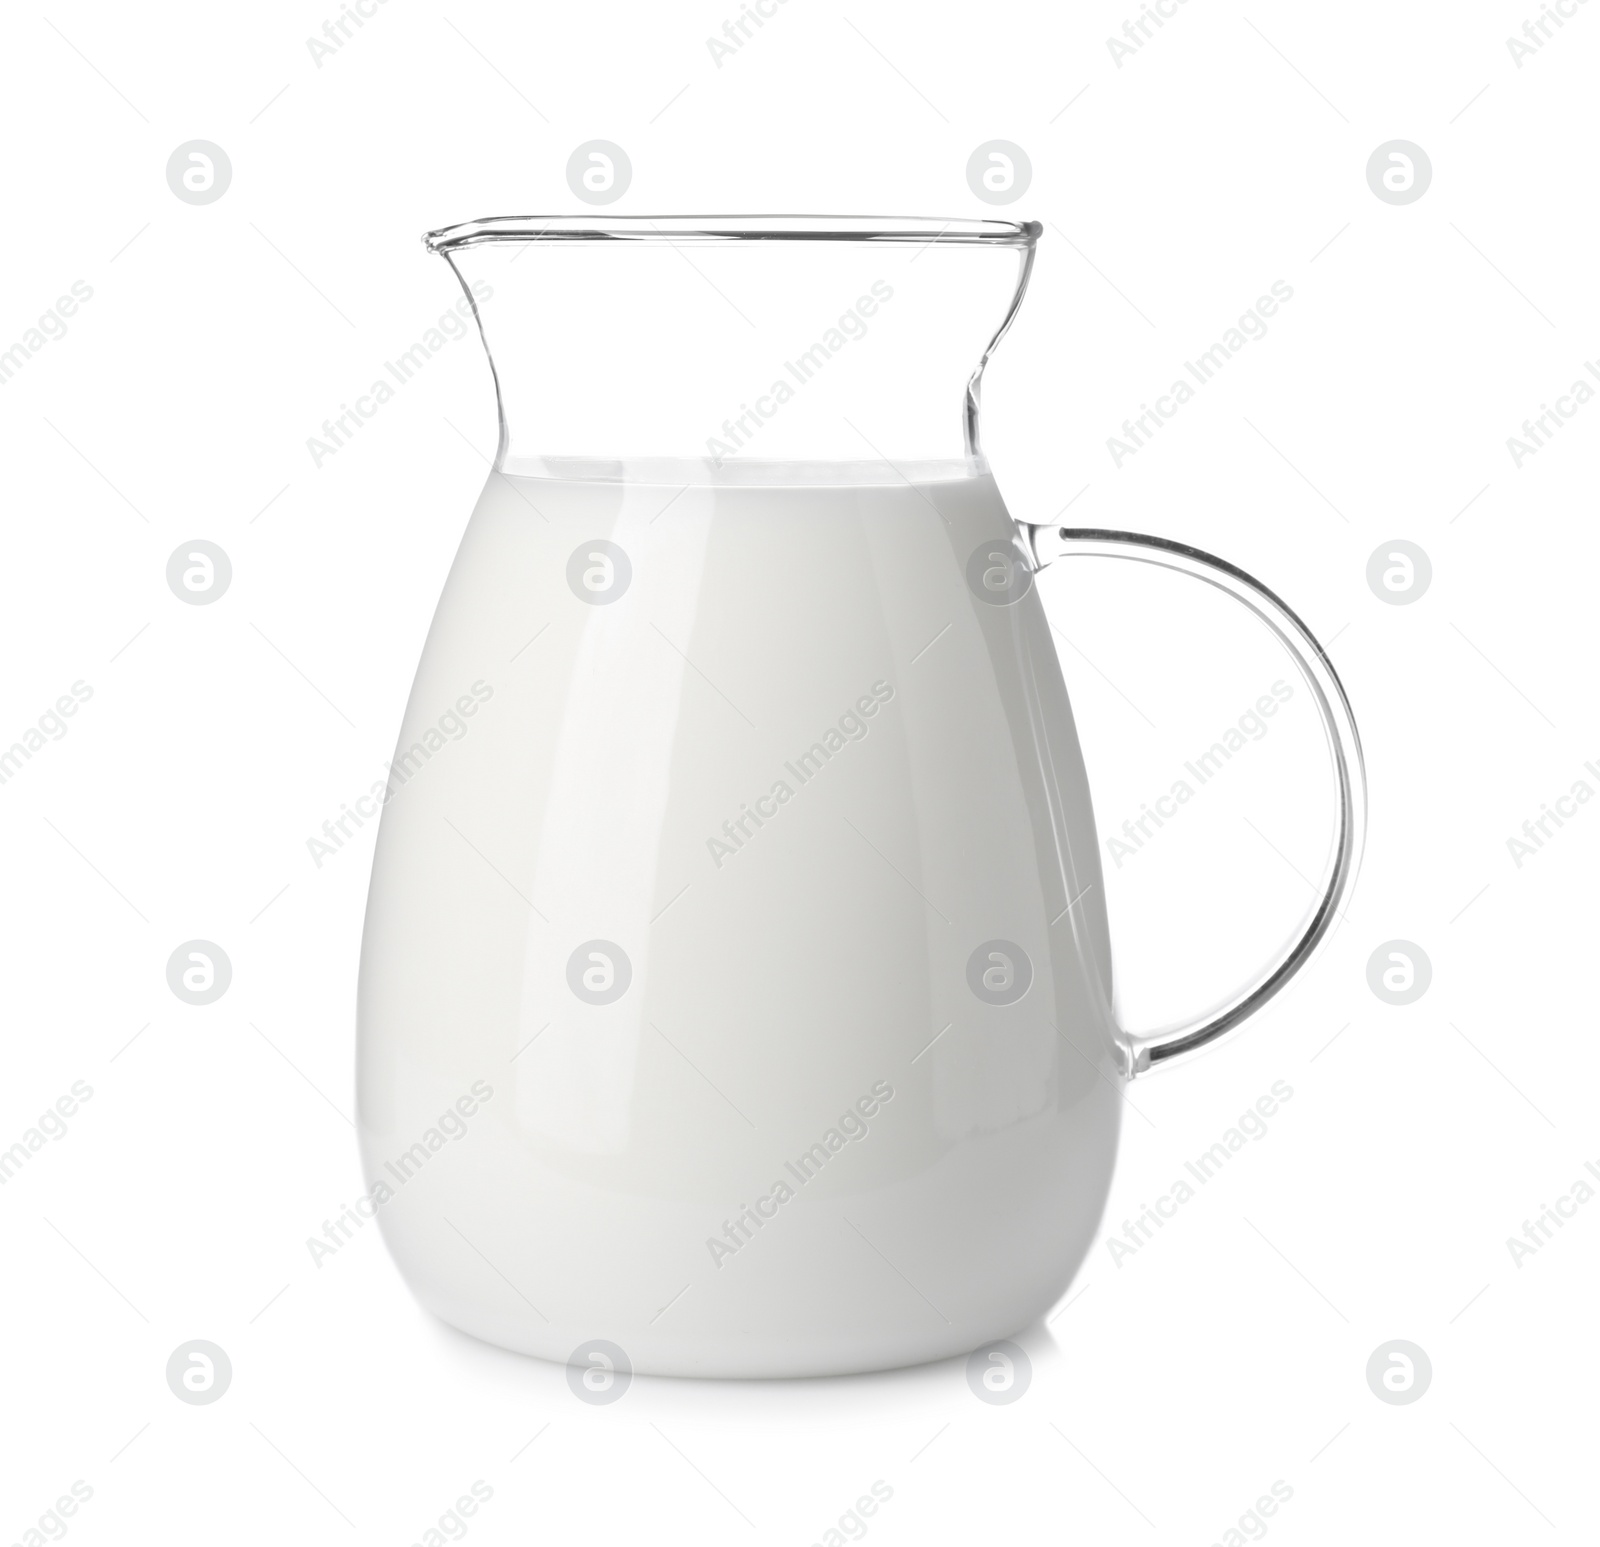 Photo of Jug with fresh milk on white background